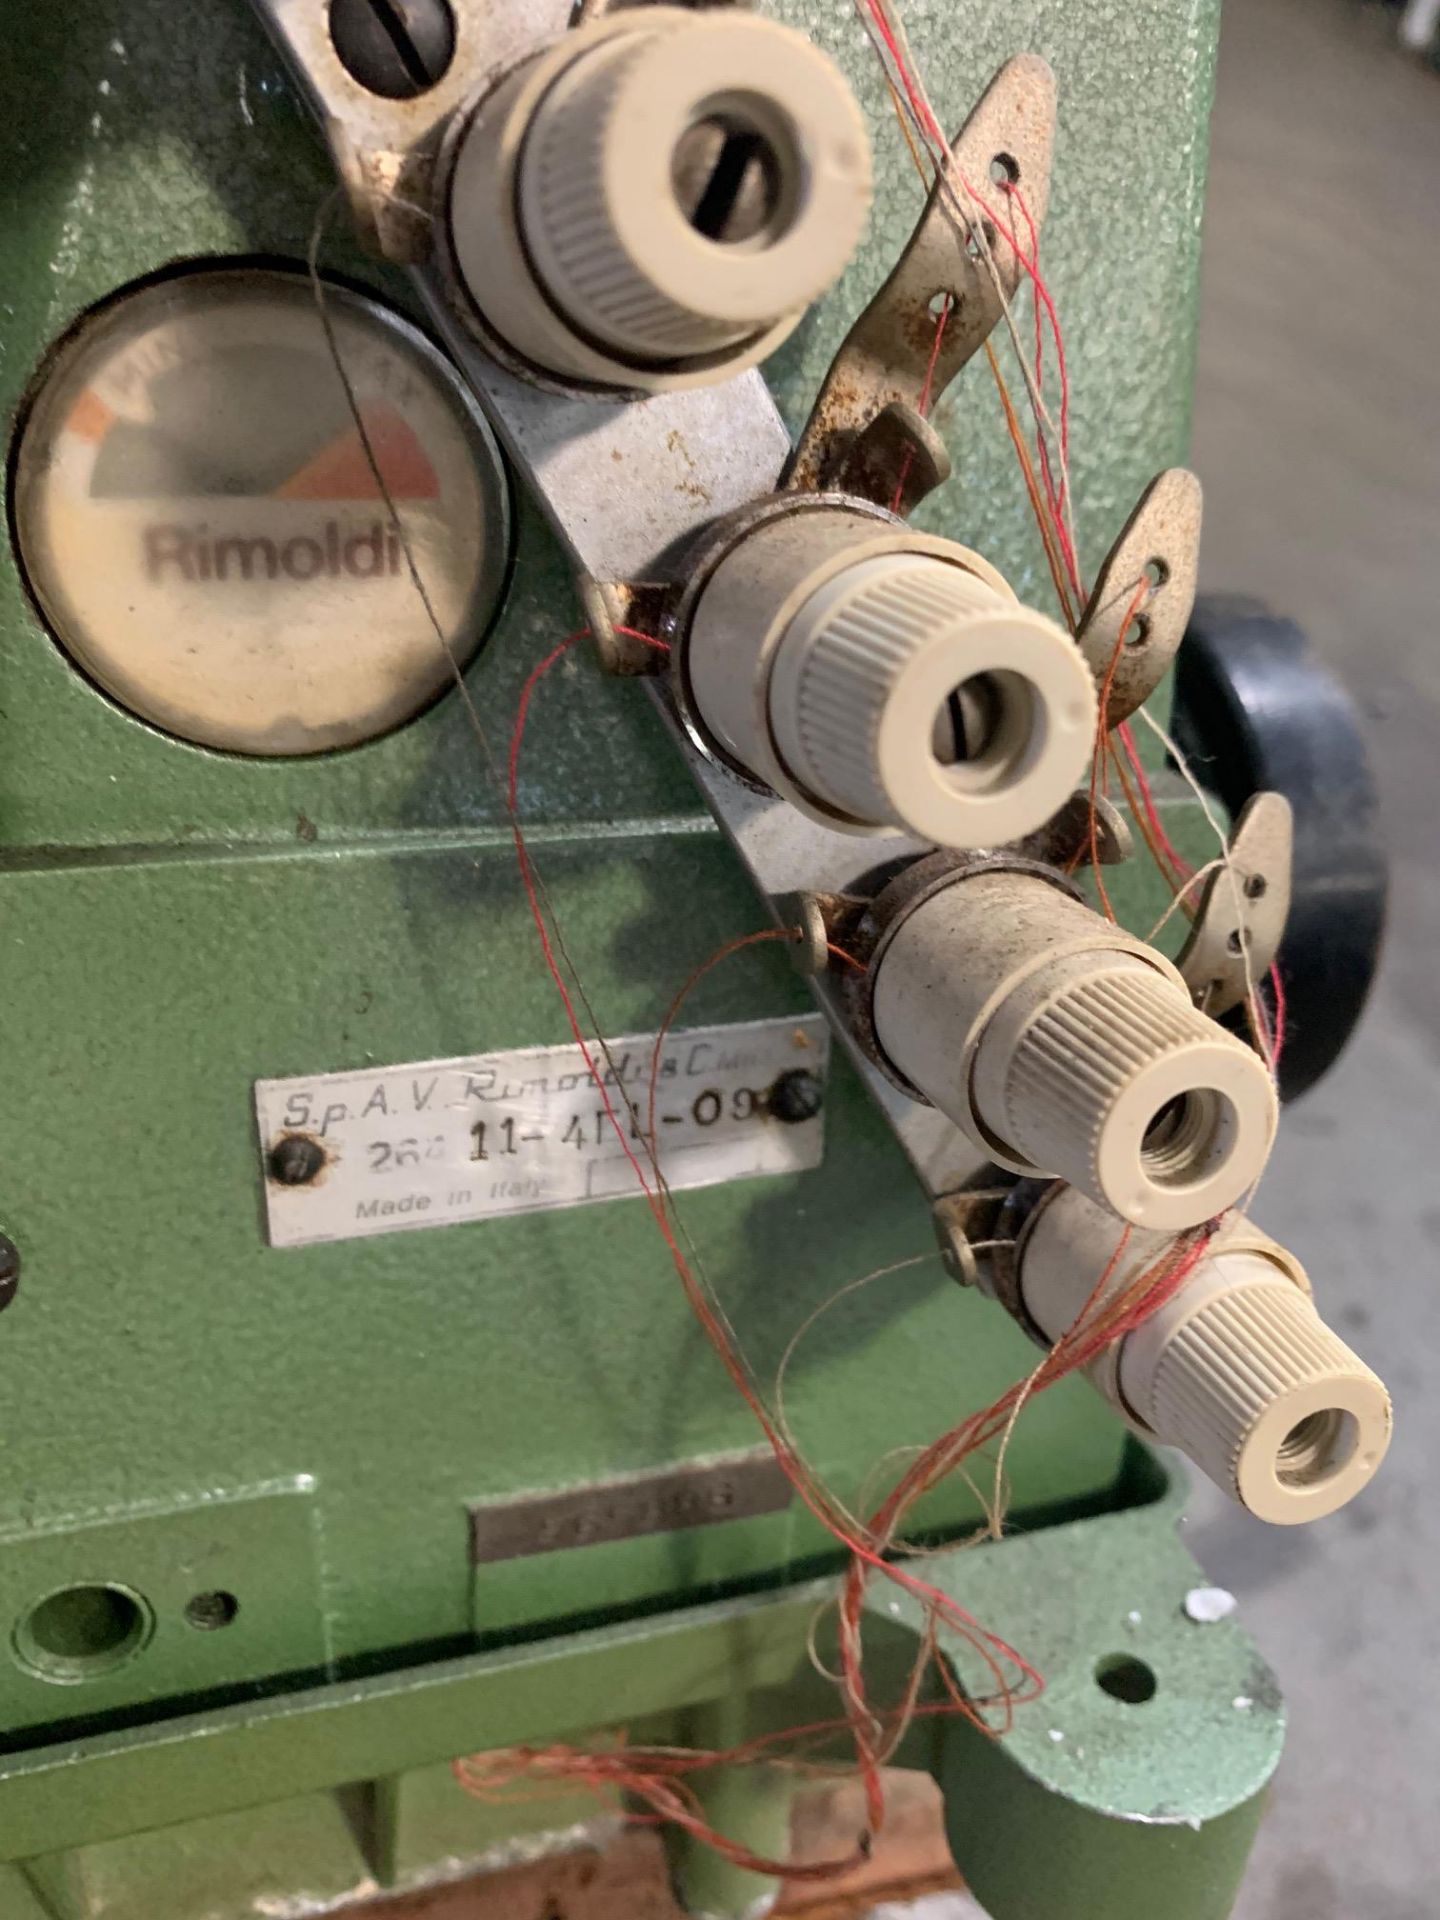 Rimoldi 264 Chainstitch Elastic Attachment 4 Multi Needle Industrial Sewing Machine (4 Units ), - Image 10 of 16